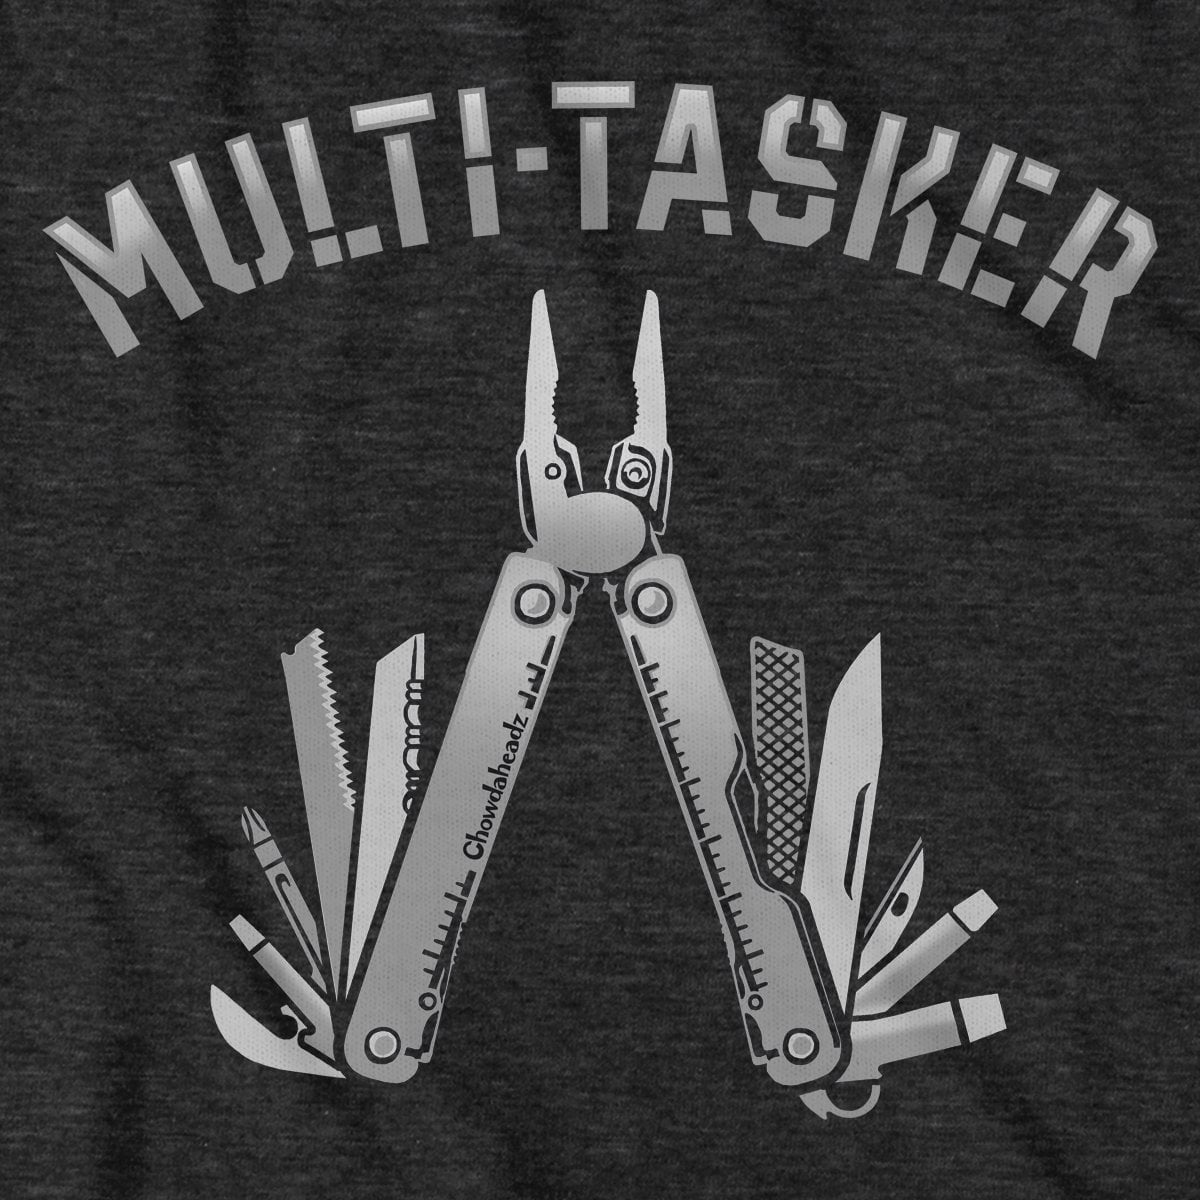 Multi-Tasker Multi-Tool T-Shirt - Chowdaheadz